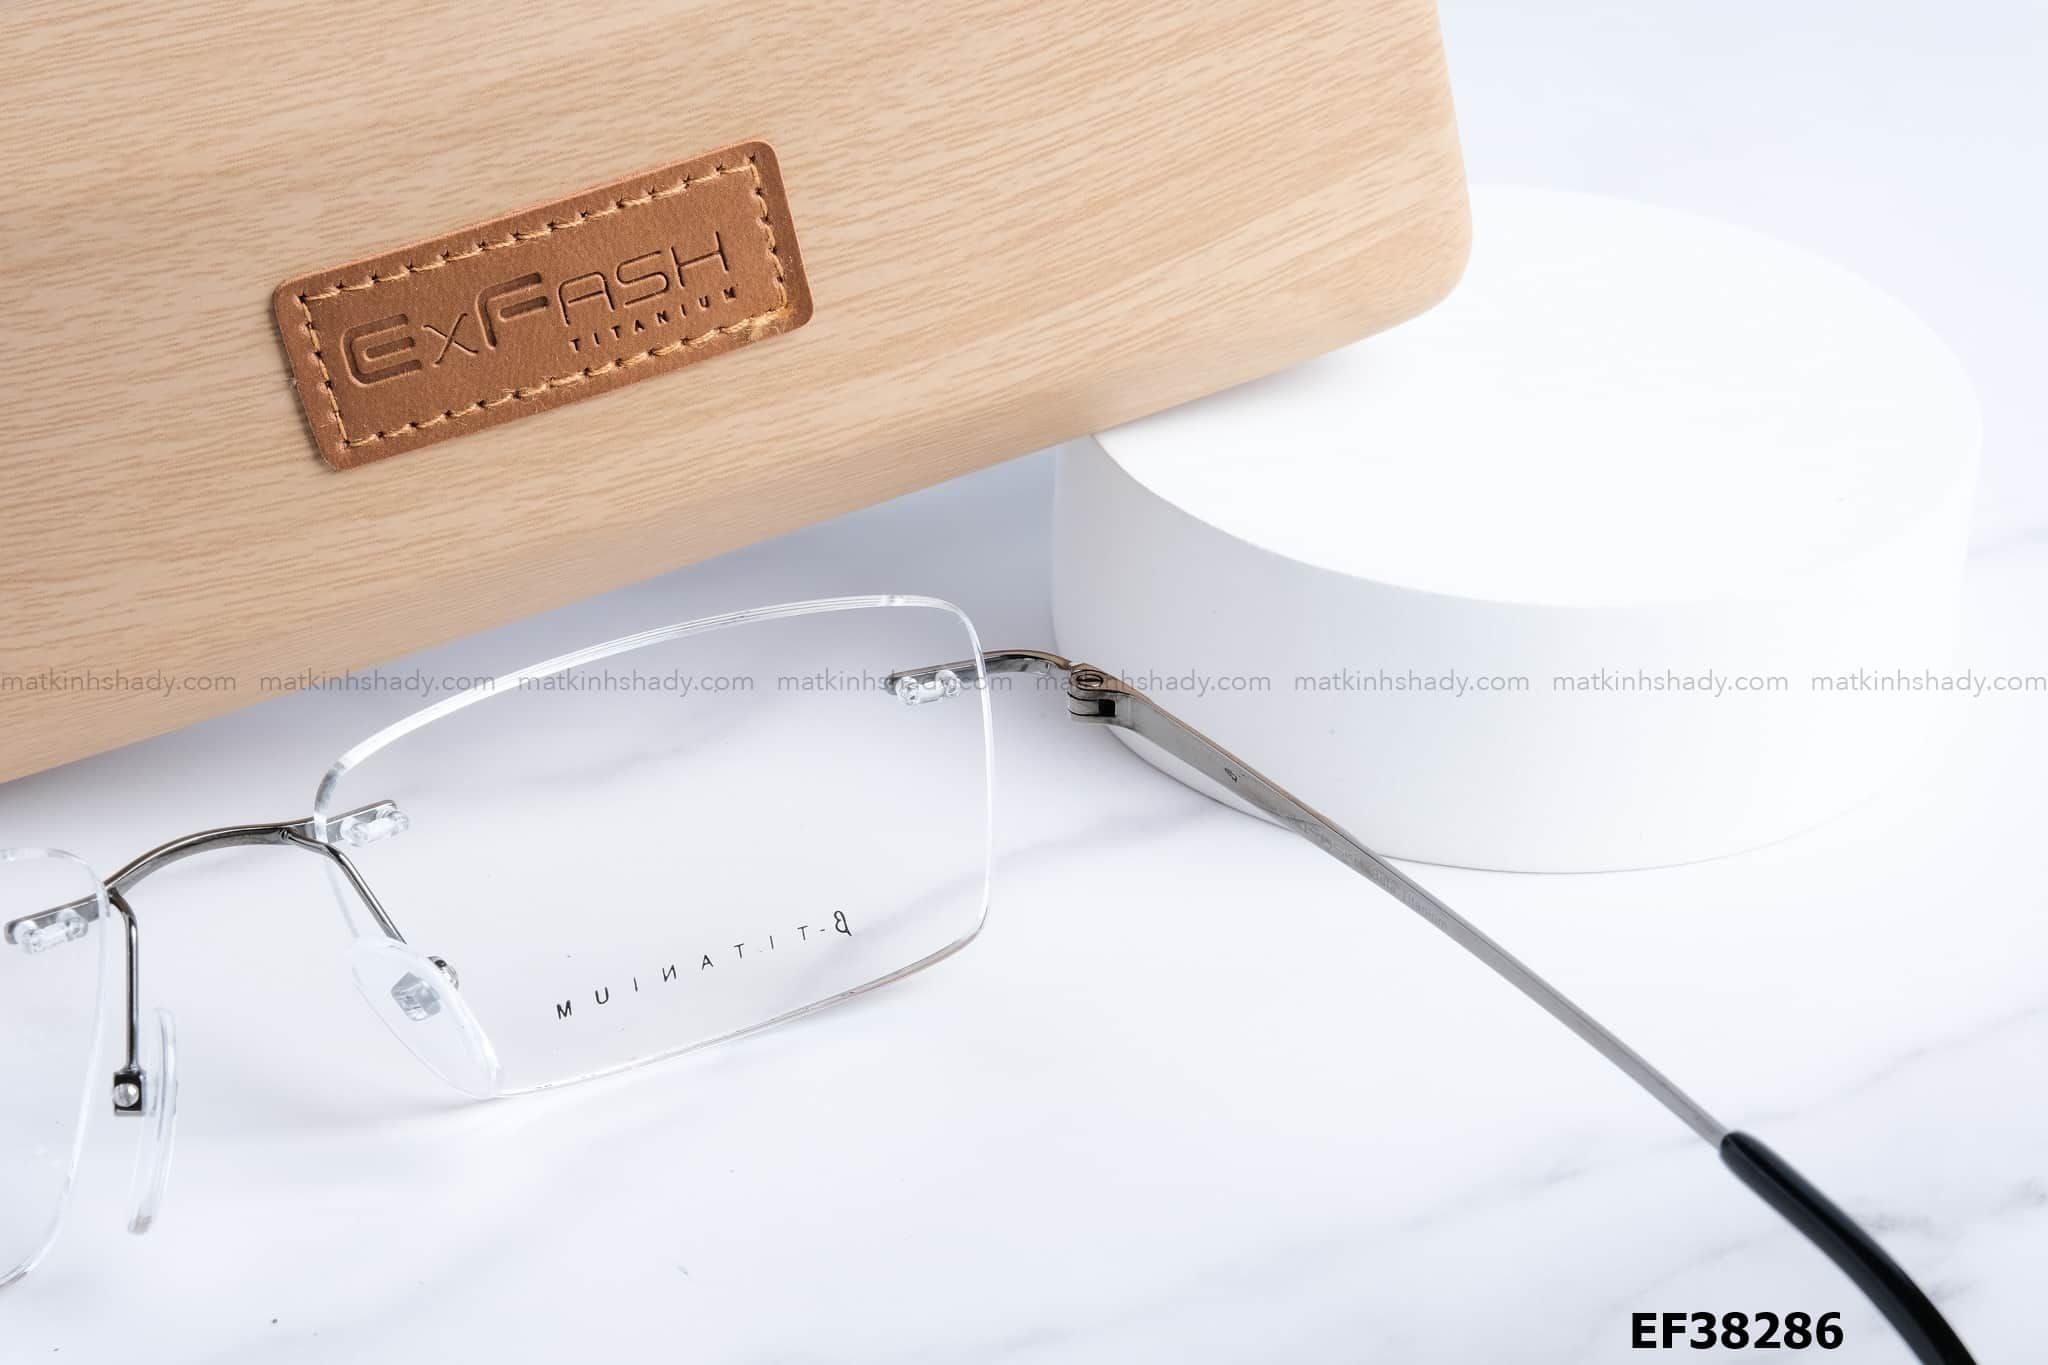  Exfash Eyewear - Glasses - EF38286 